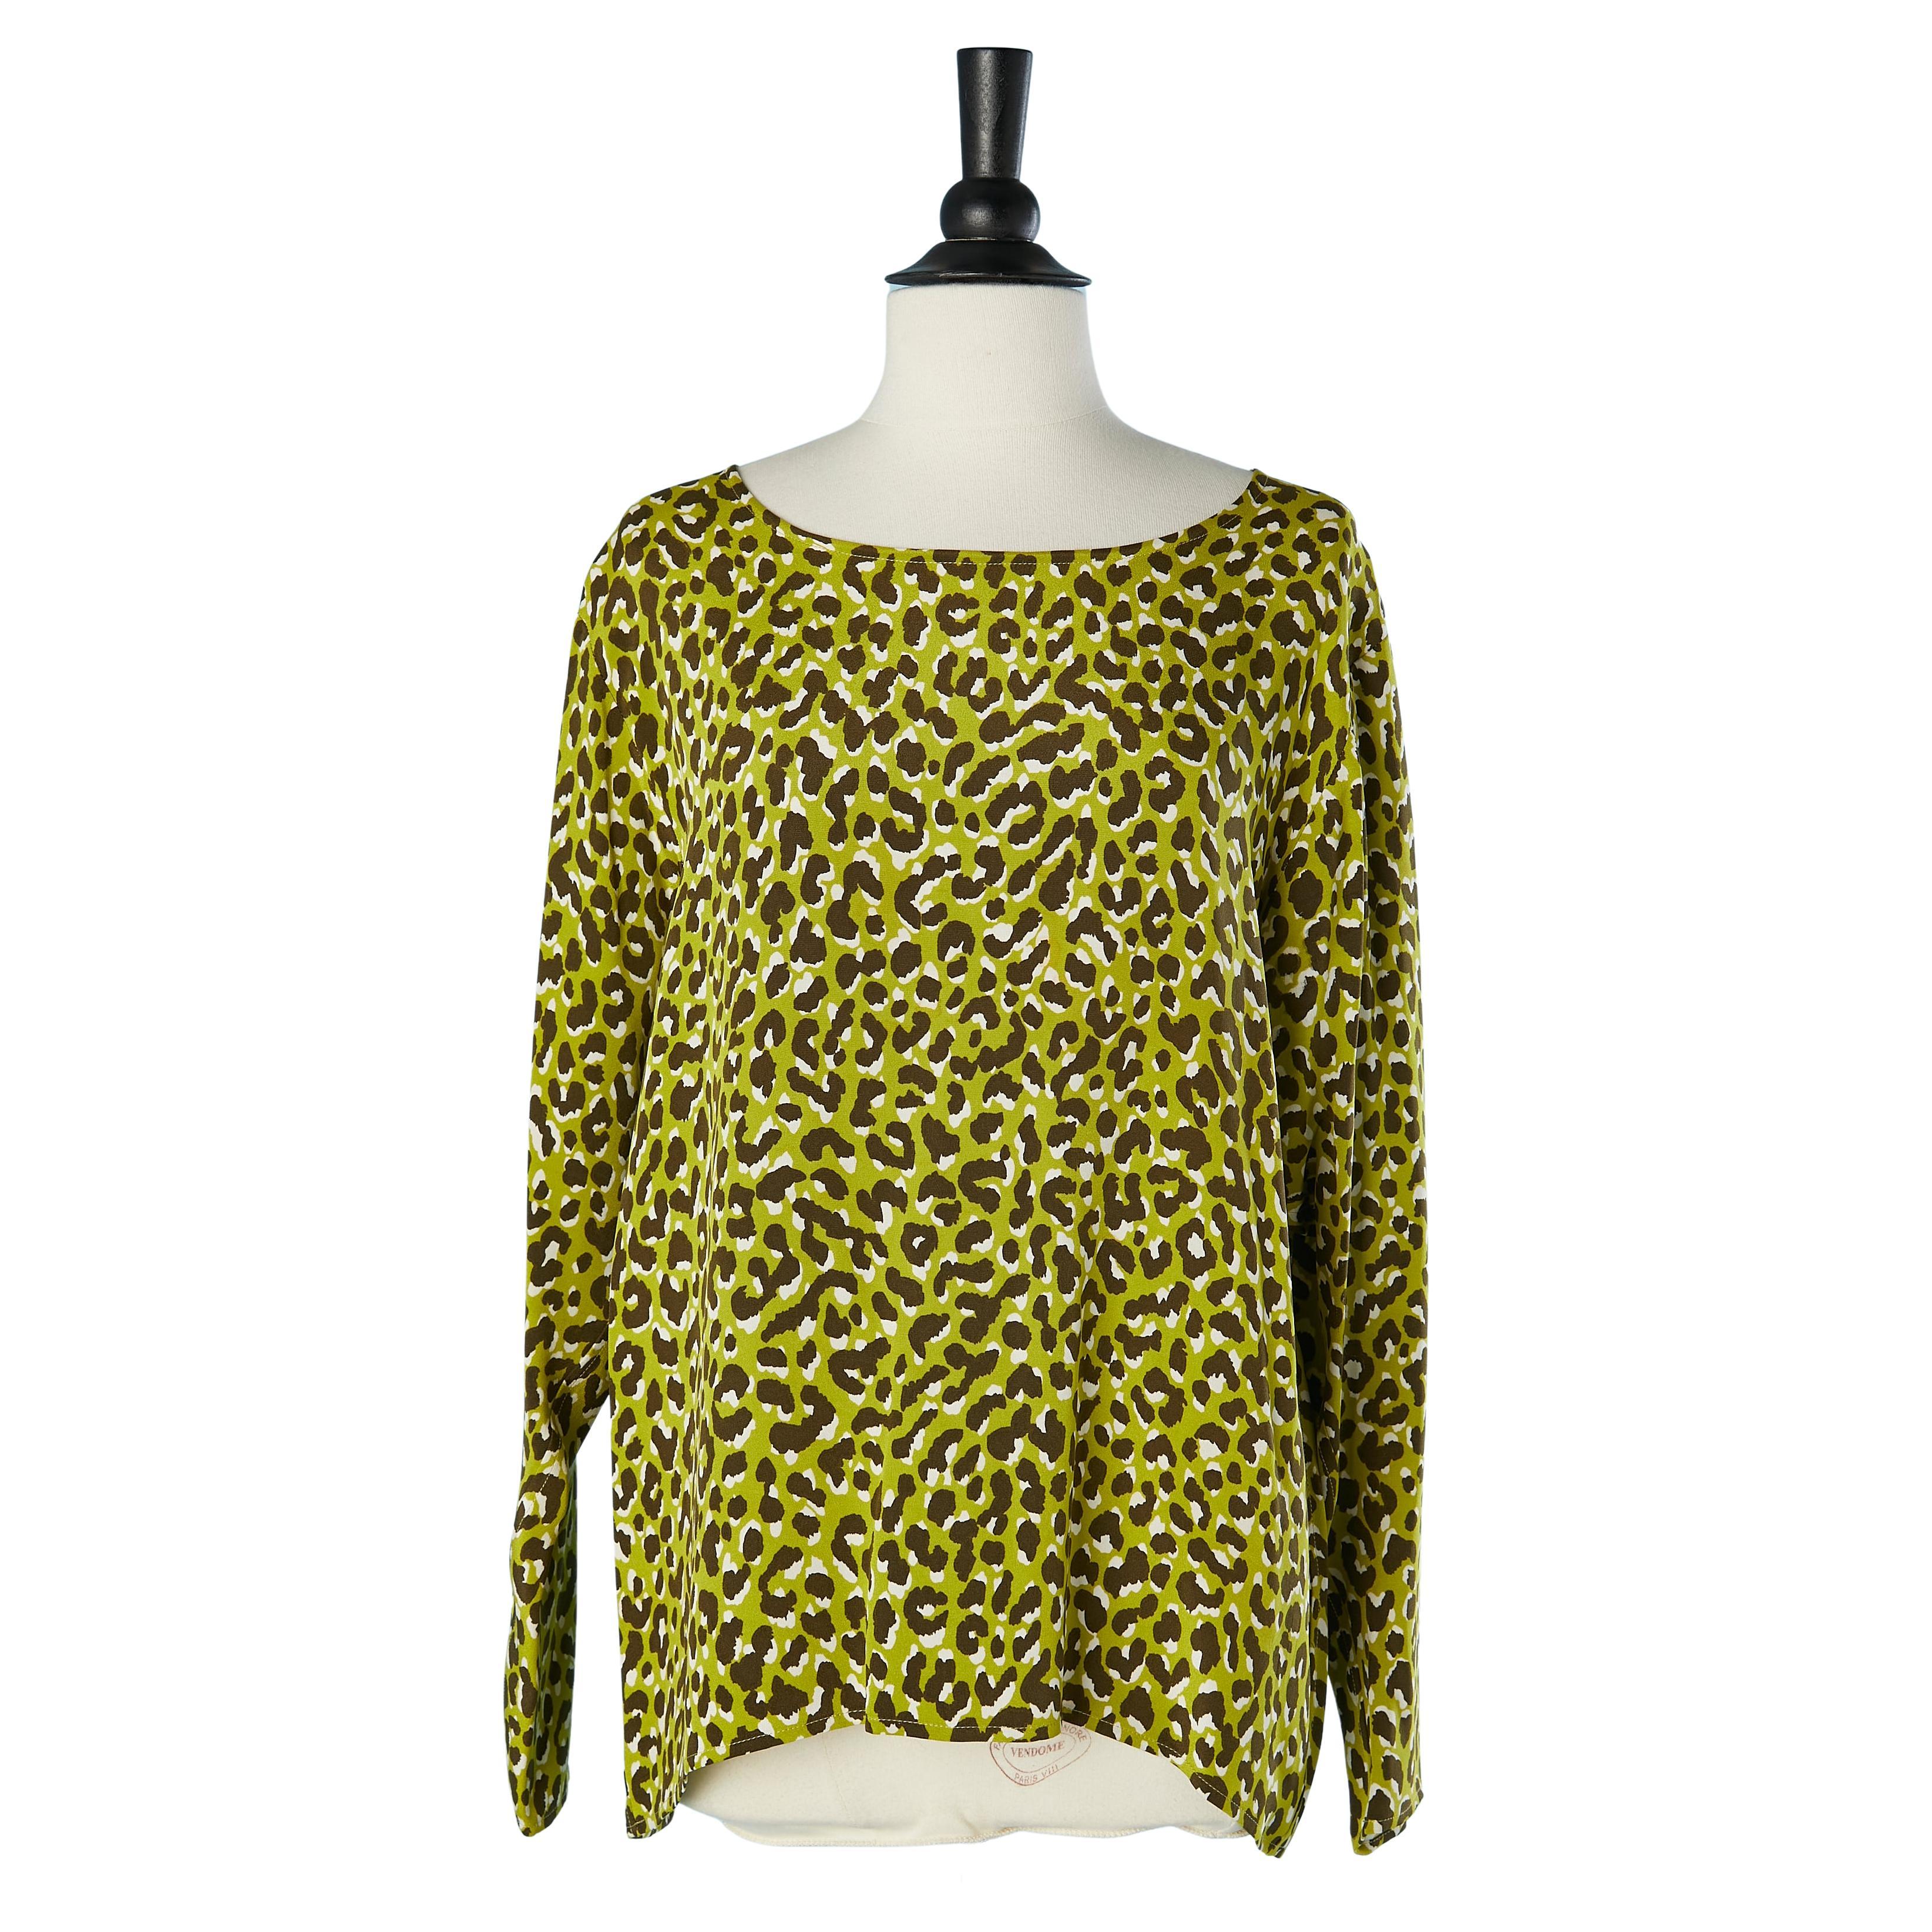 Silk leopard printed blouse Yves Saint Laurent Rive Gauche 